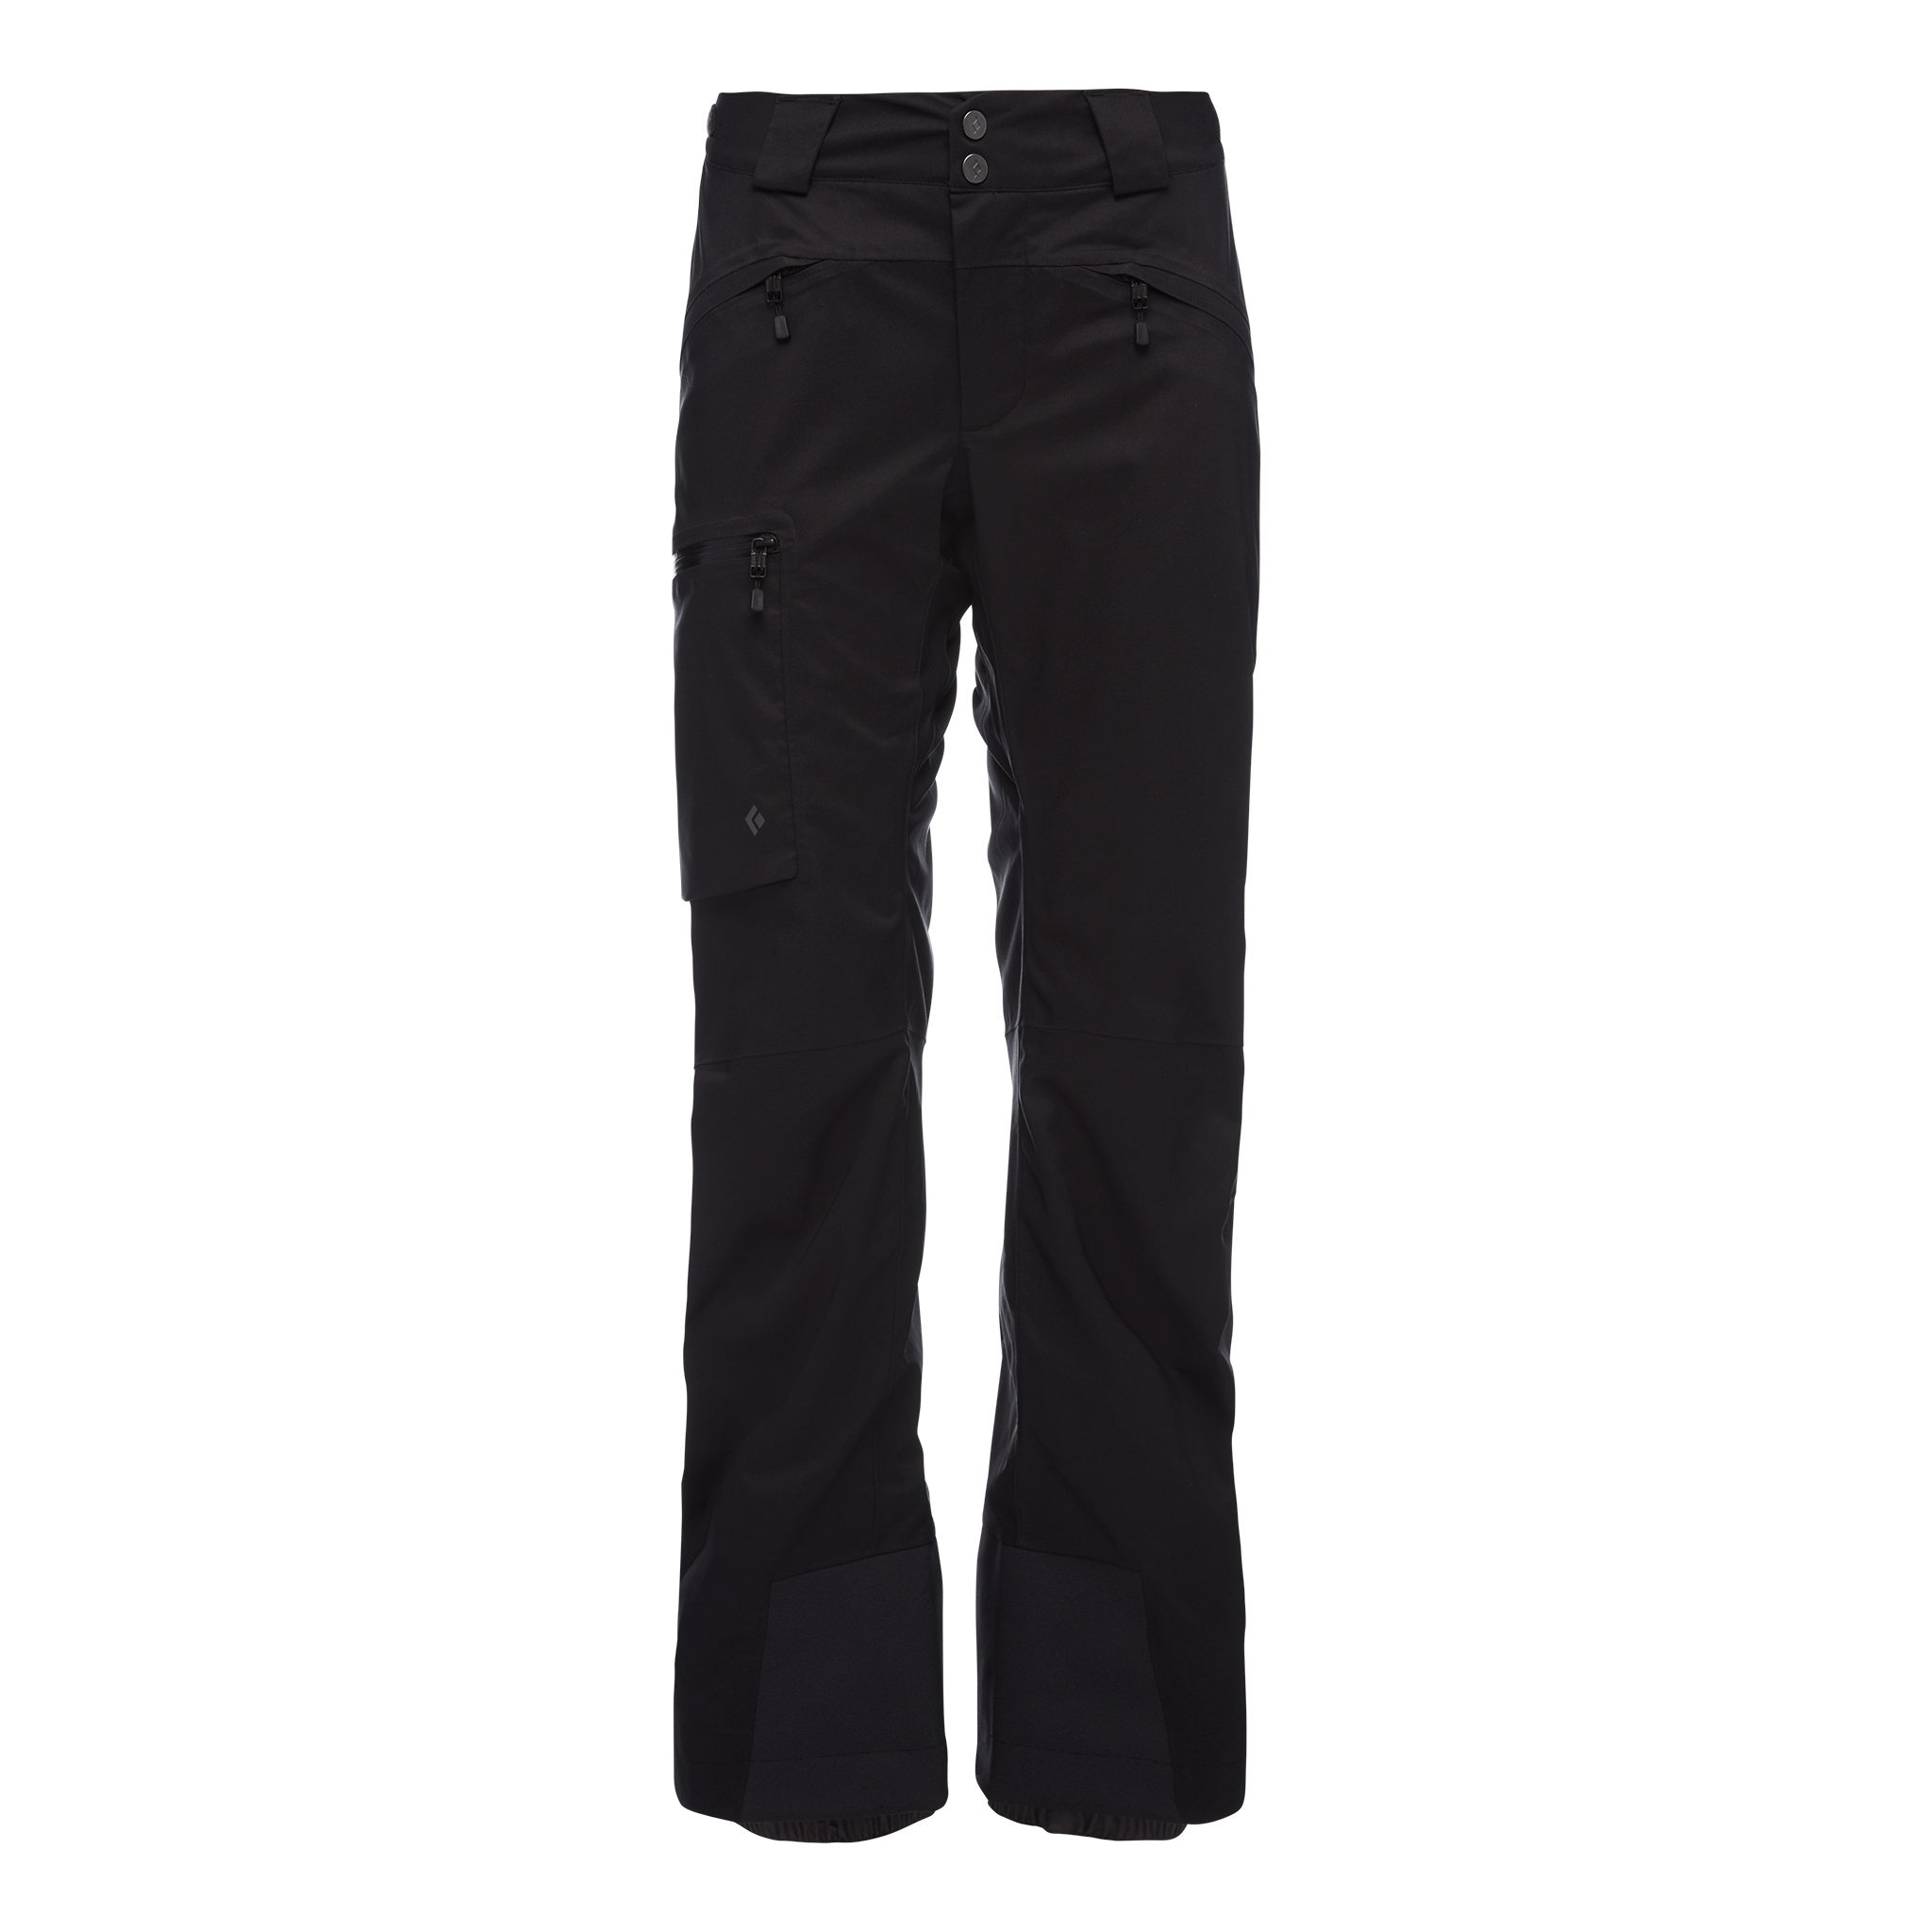 Black Diamond Equipment Women's BoundaryLine Insulated Pants, XL Black